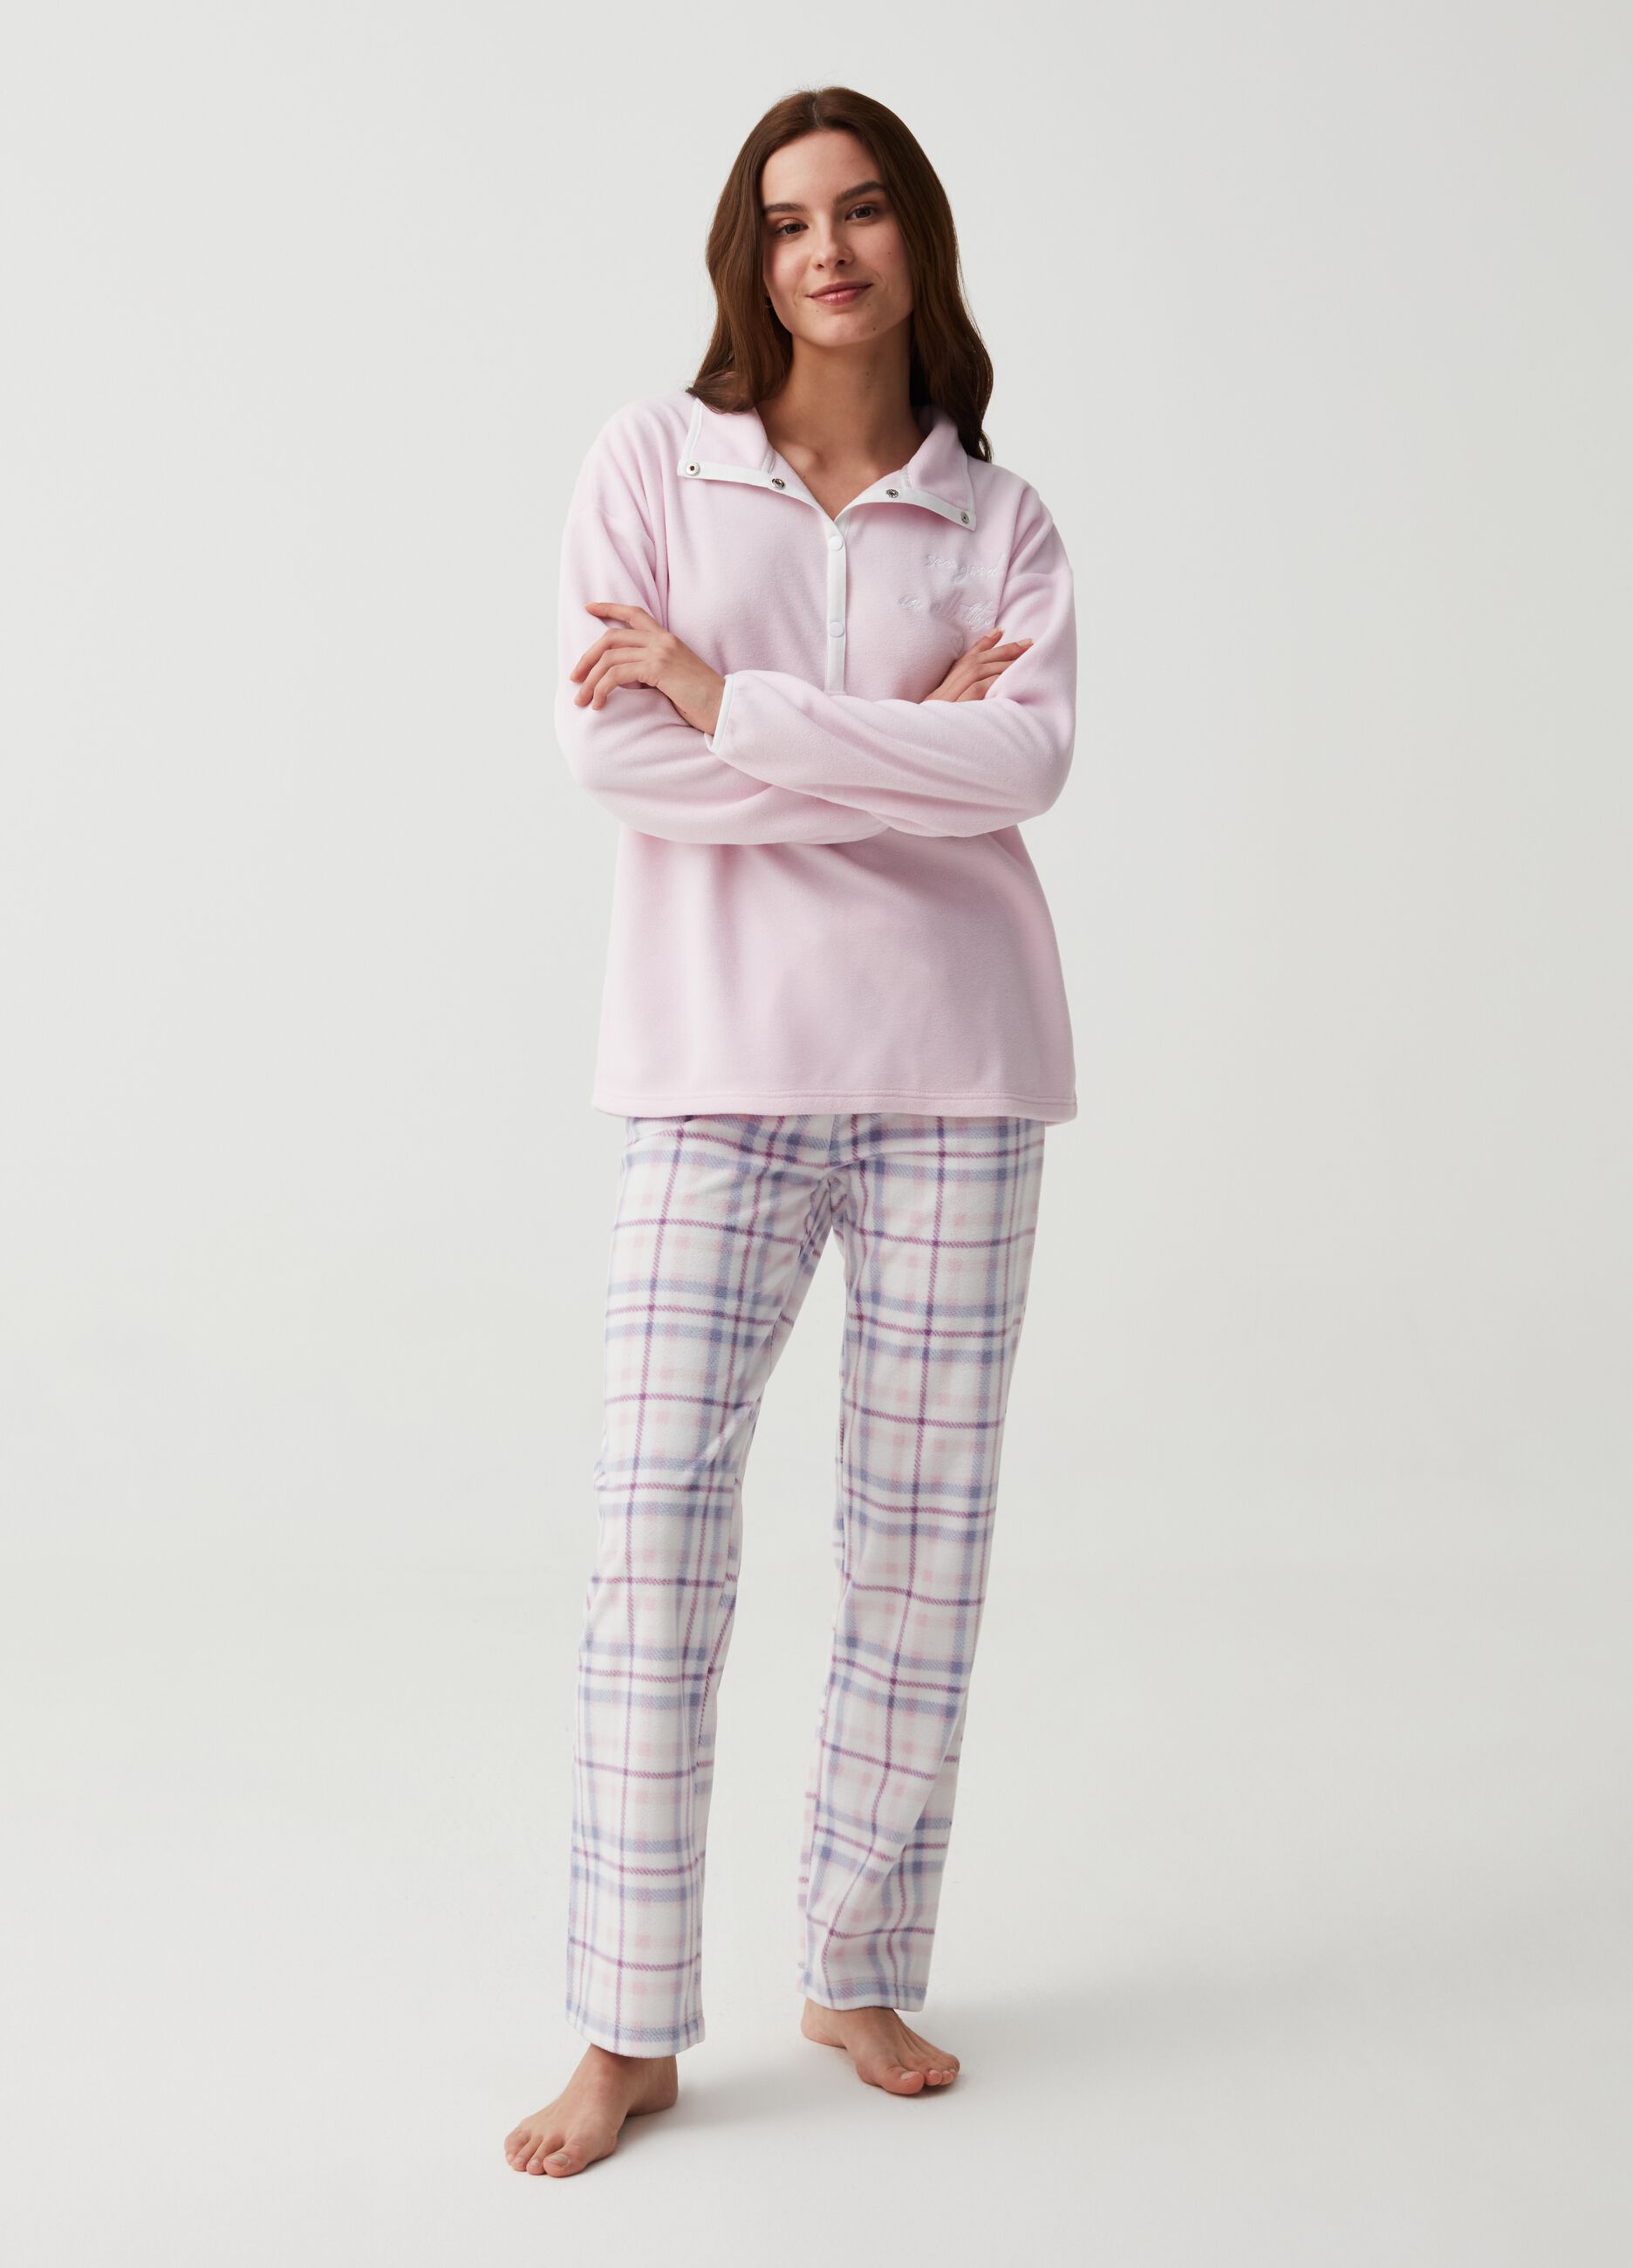 Pantalón pijama de tejido polar estampado cuadros